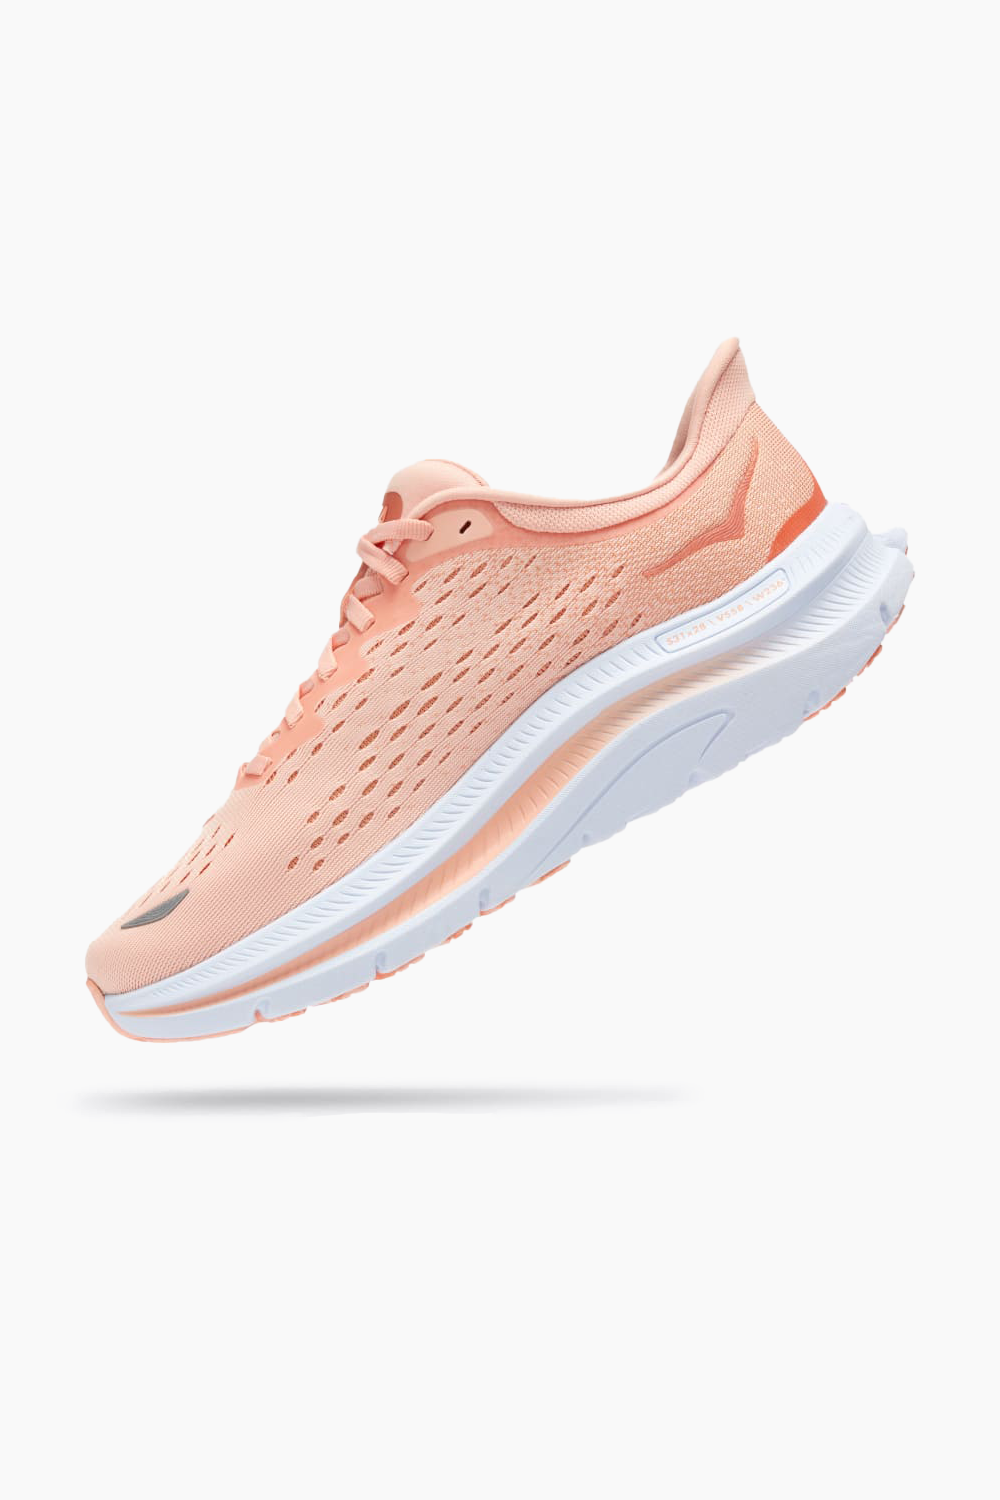 Hoka Women's Kawana Running Shoes in Peach Parfait/ Shell Coral